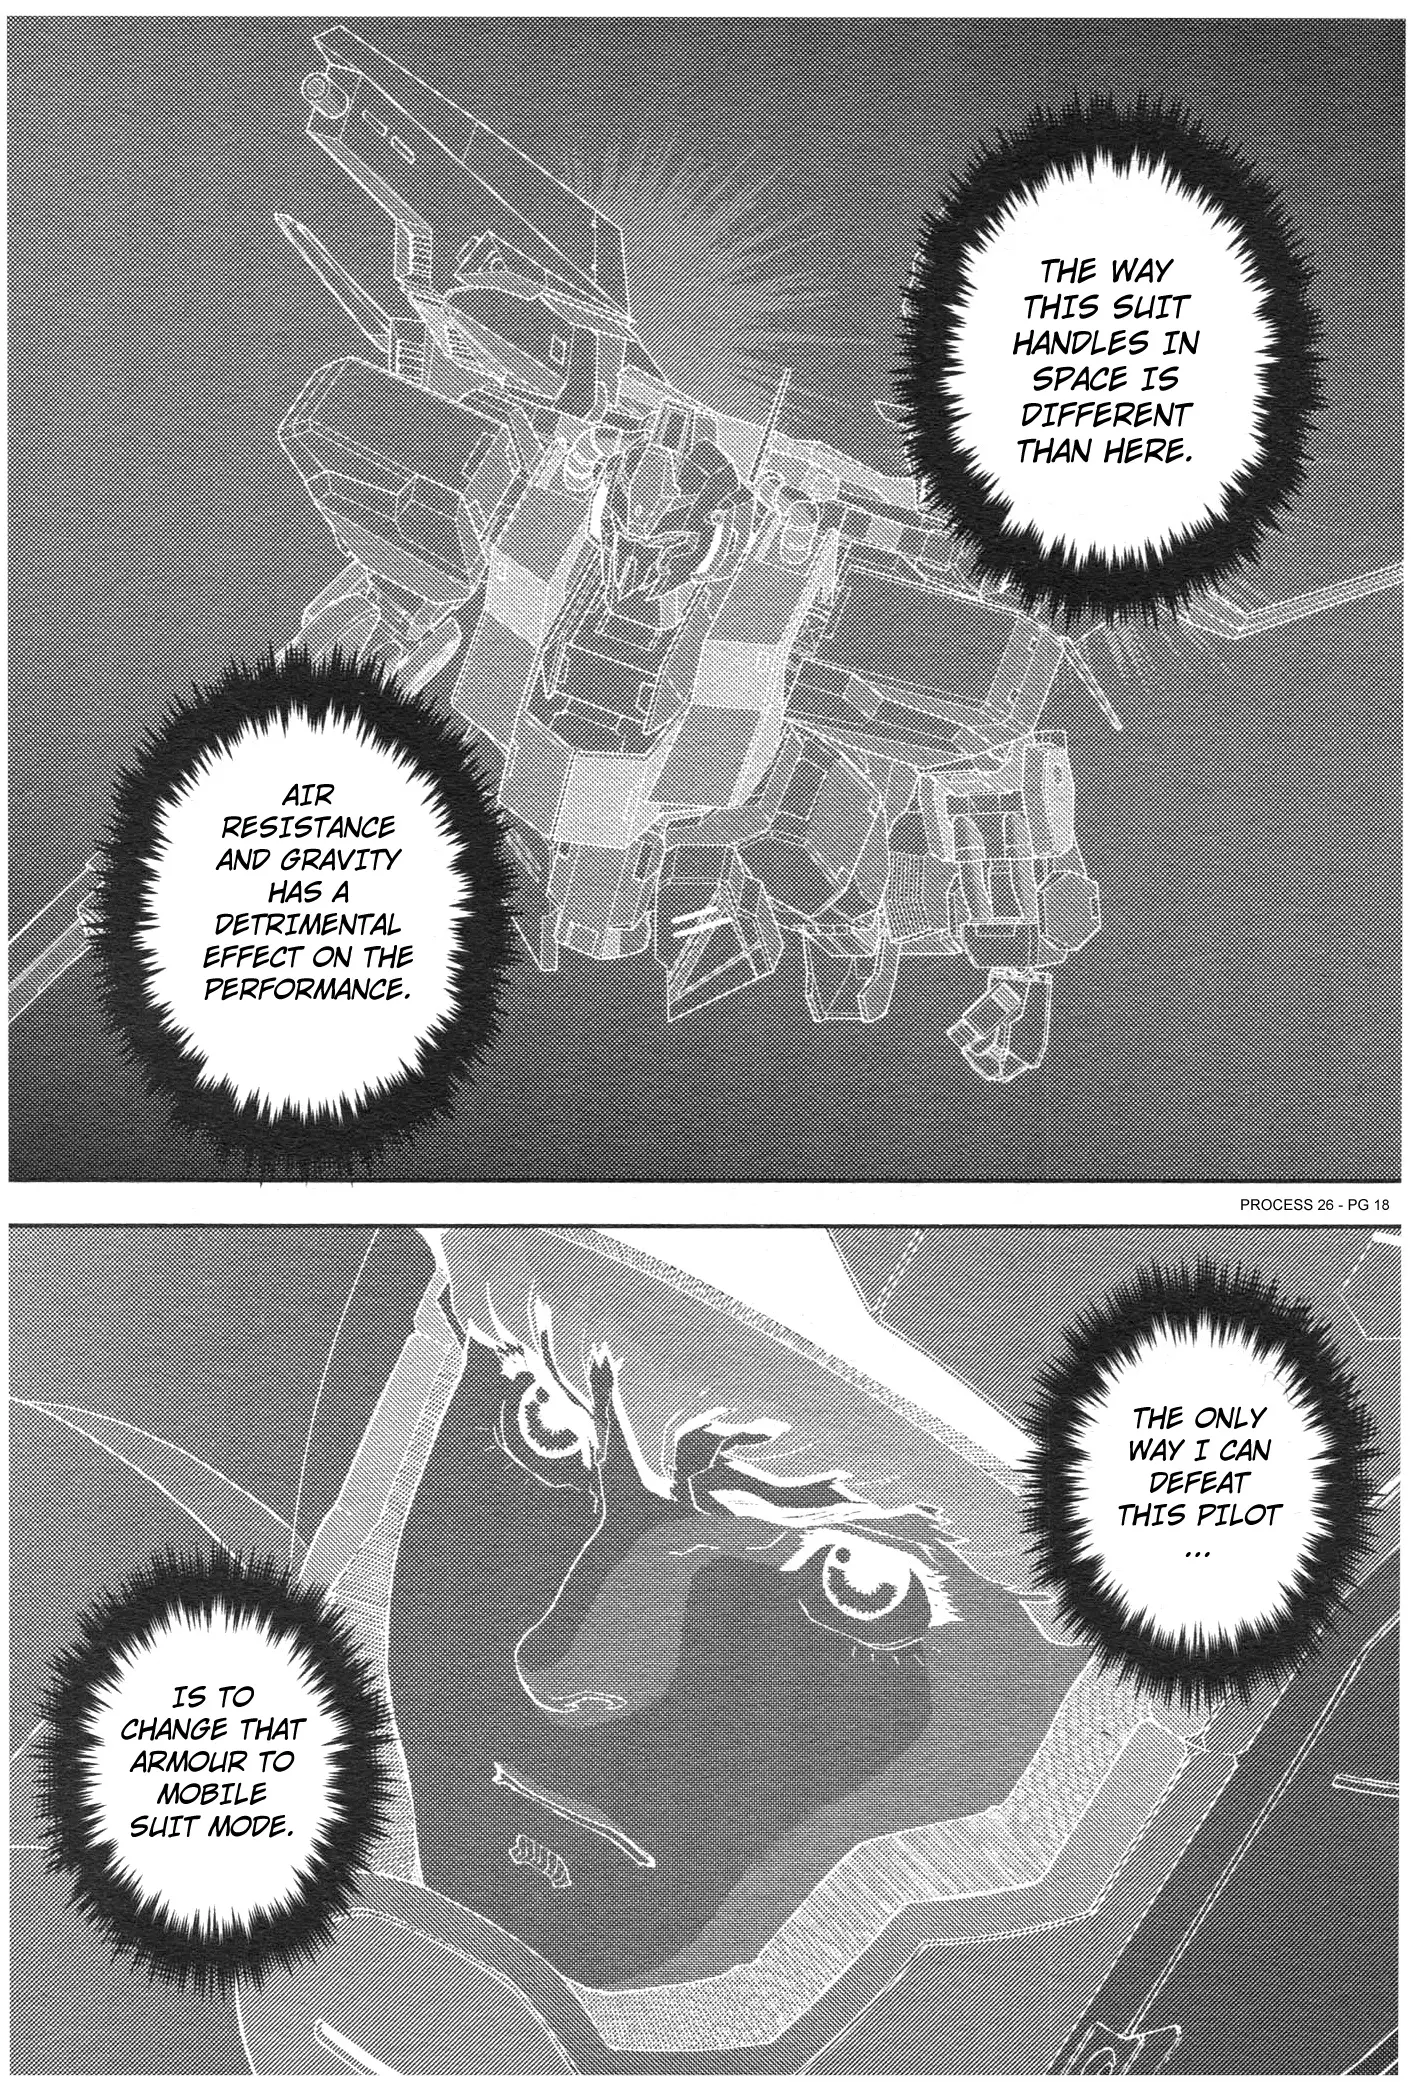 Mobile Suit Zeta Gundam - Define - 75 page 18-4e16fd4f